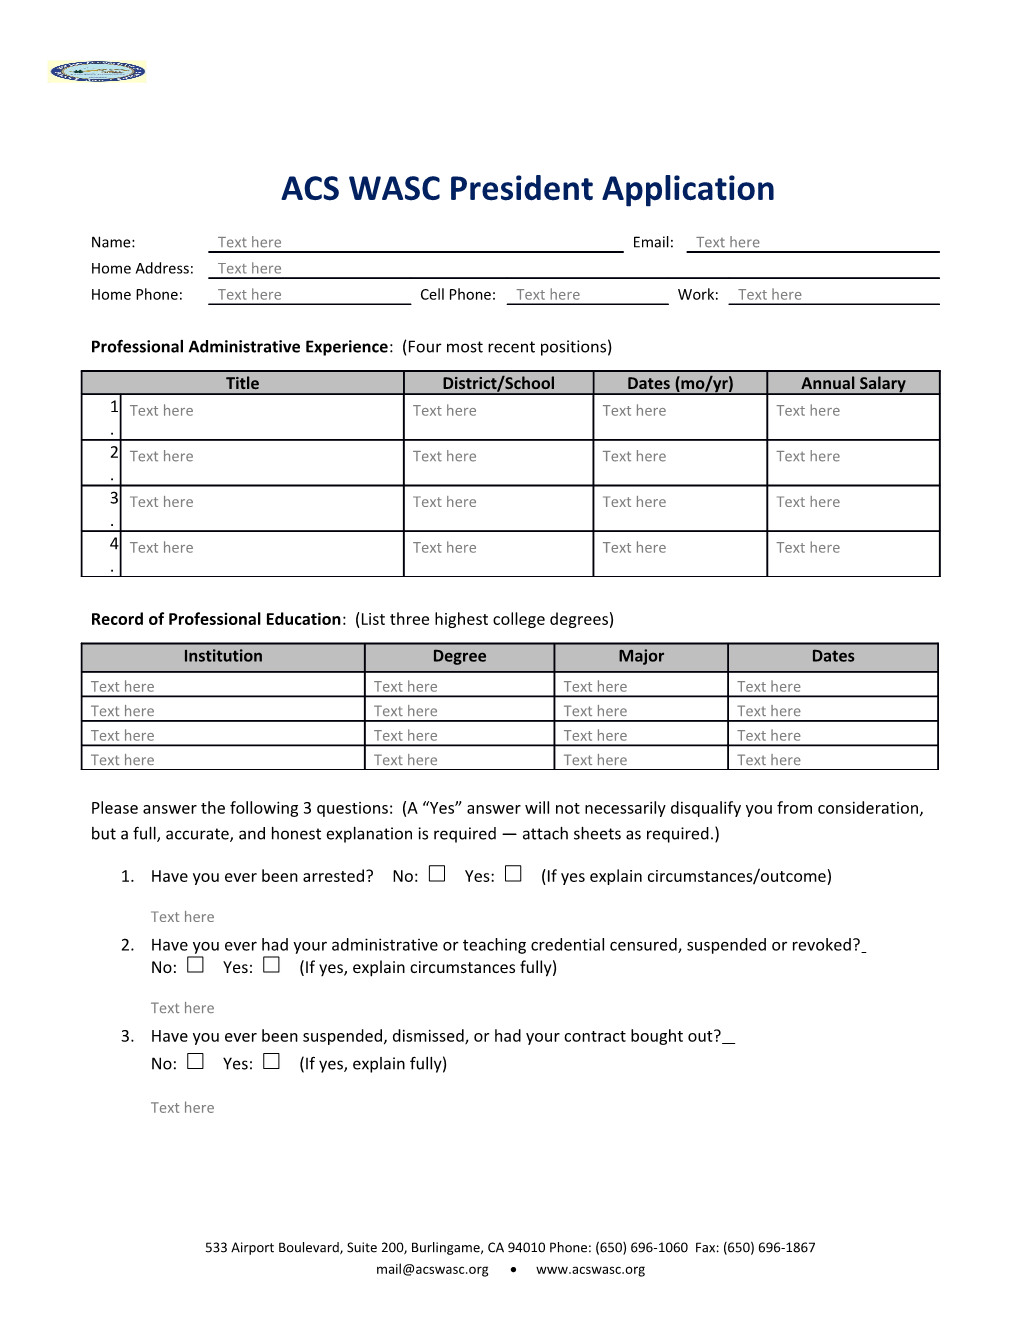 ACS WASC President Application